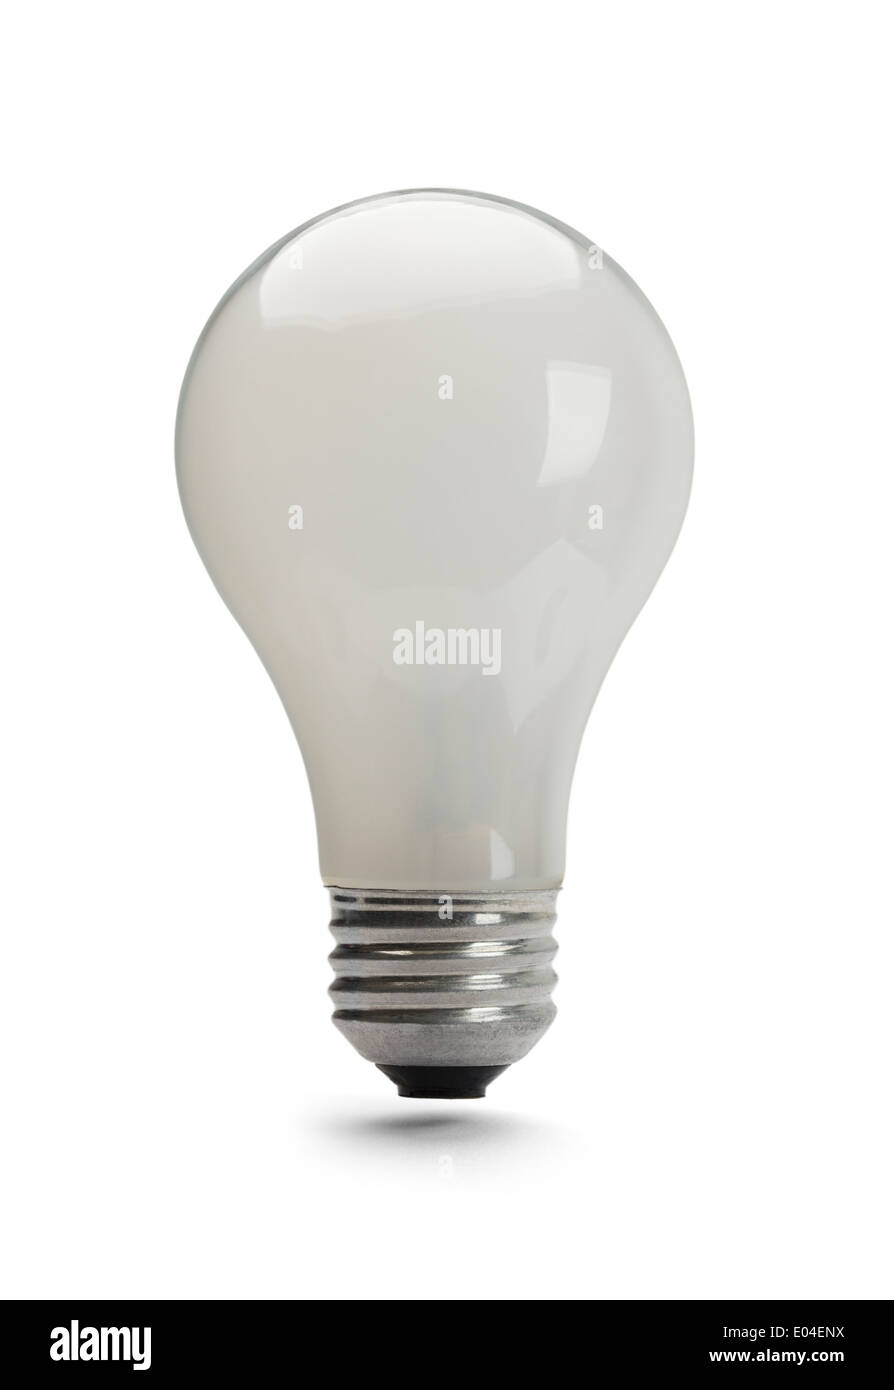 100 watt Light Bulb Off Isolated on White Background. Stock Photo